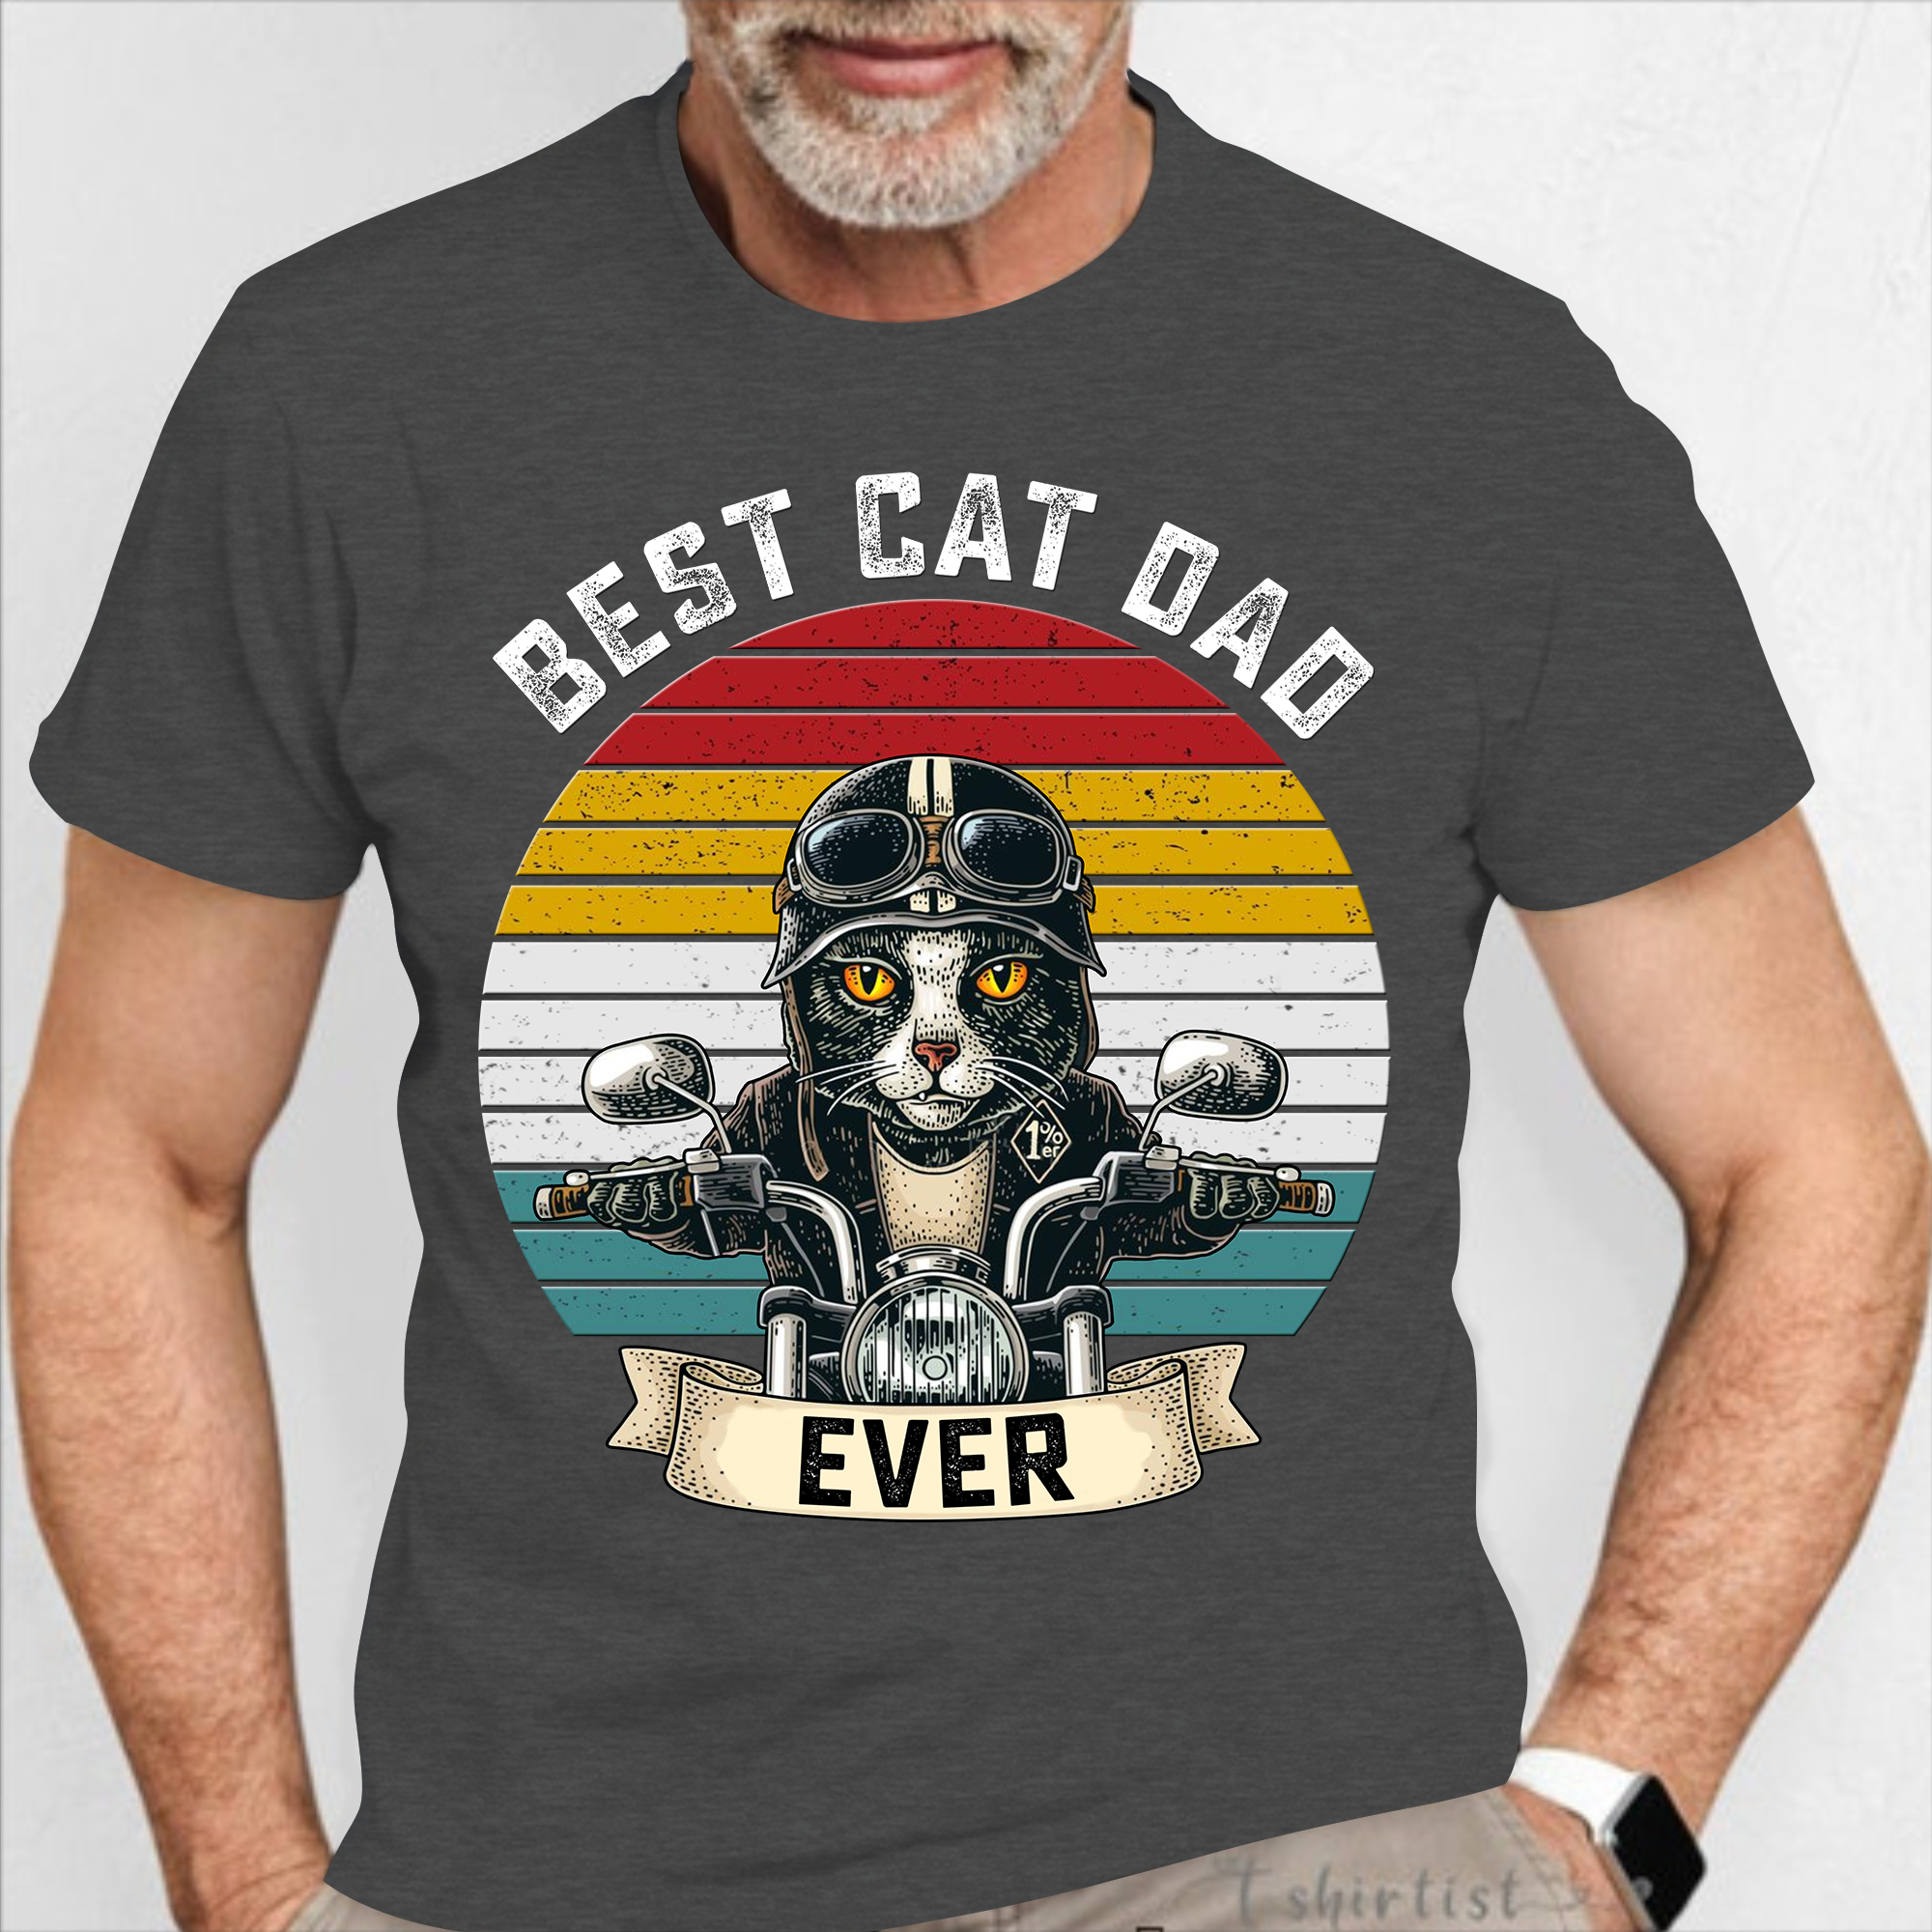 Best Cat Dad Ever T-Shirt